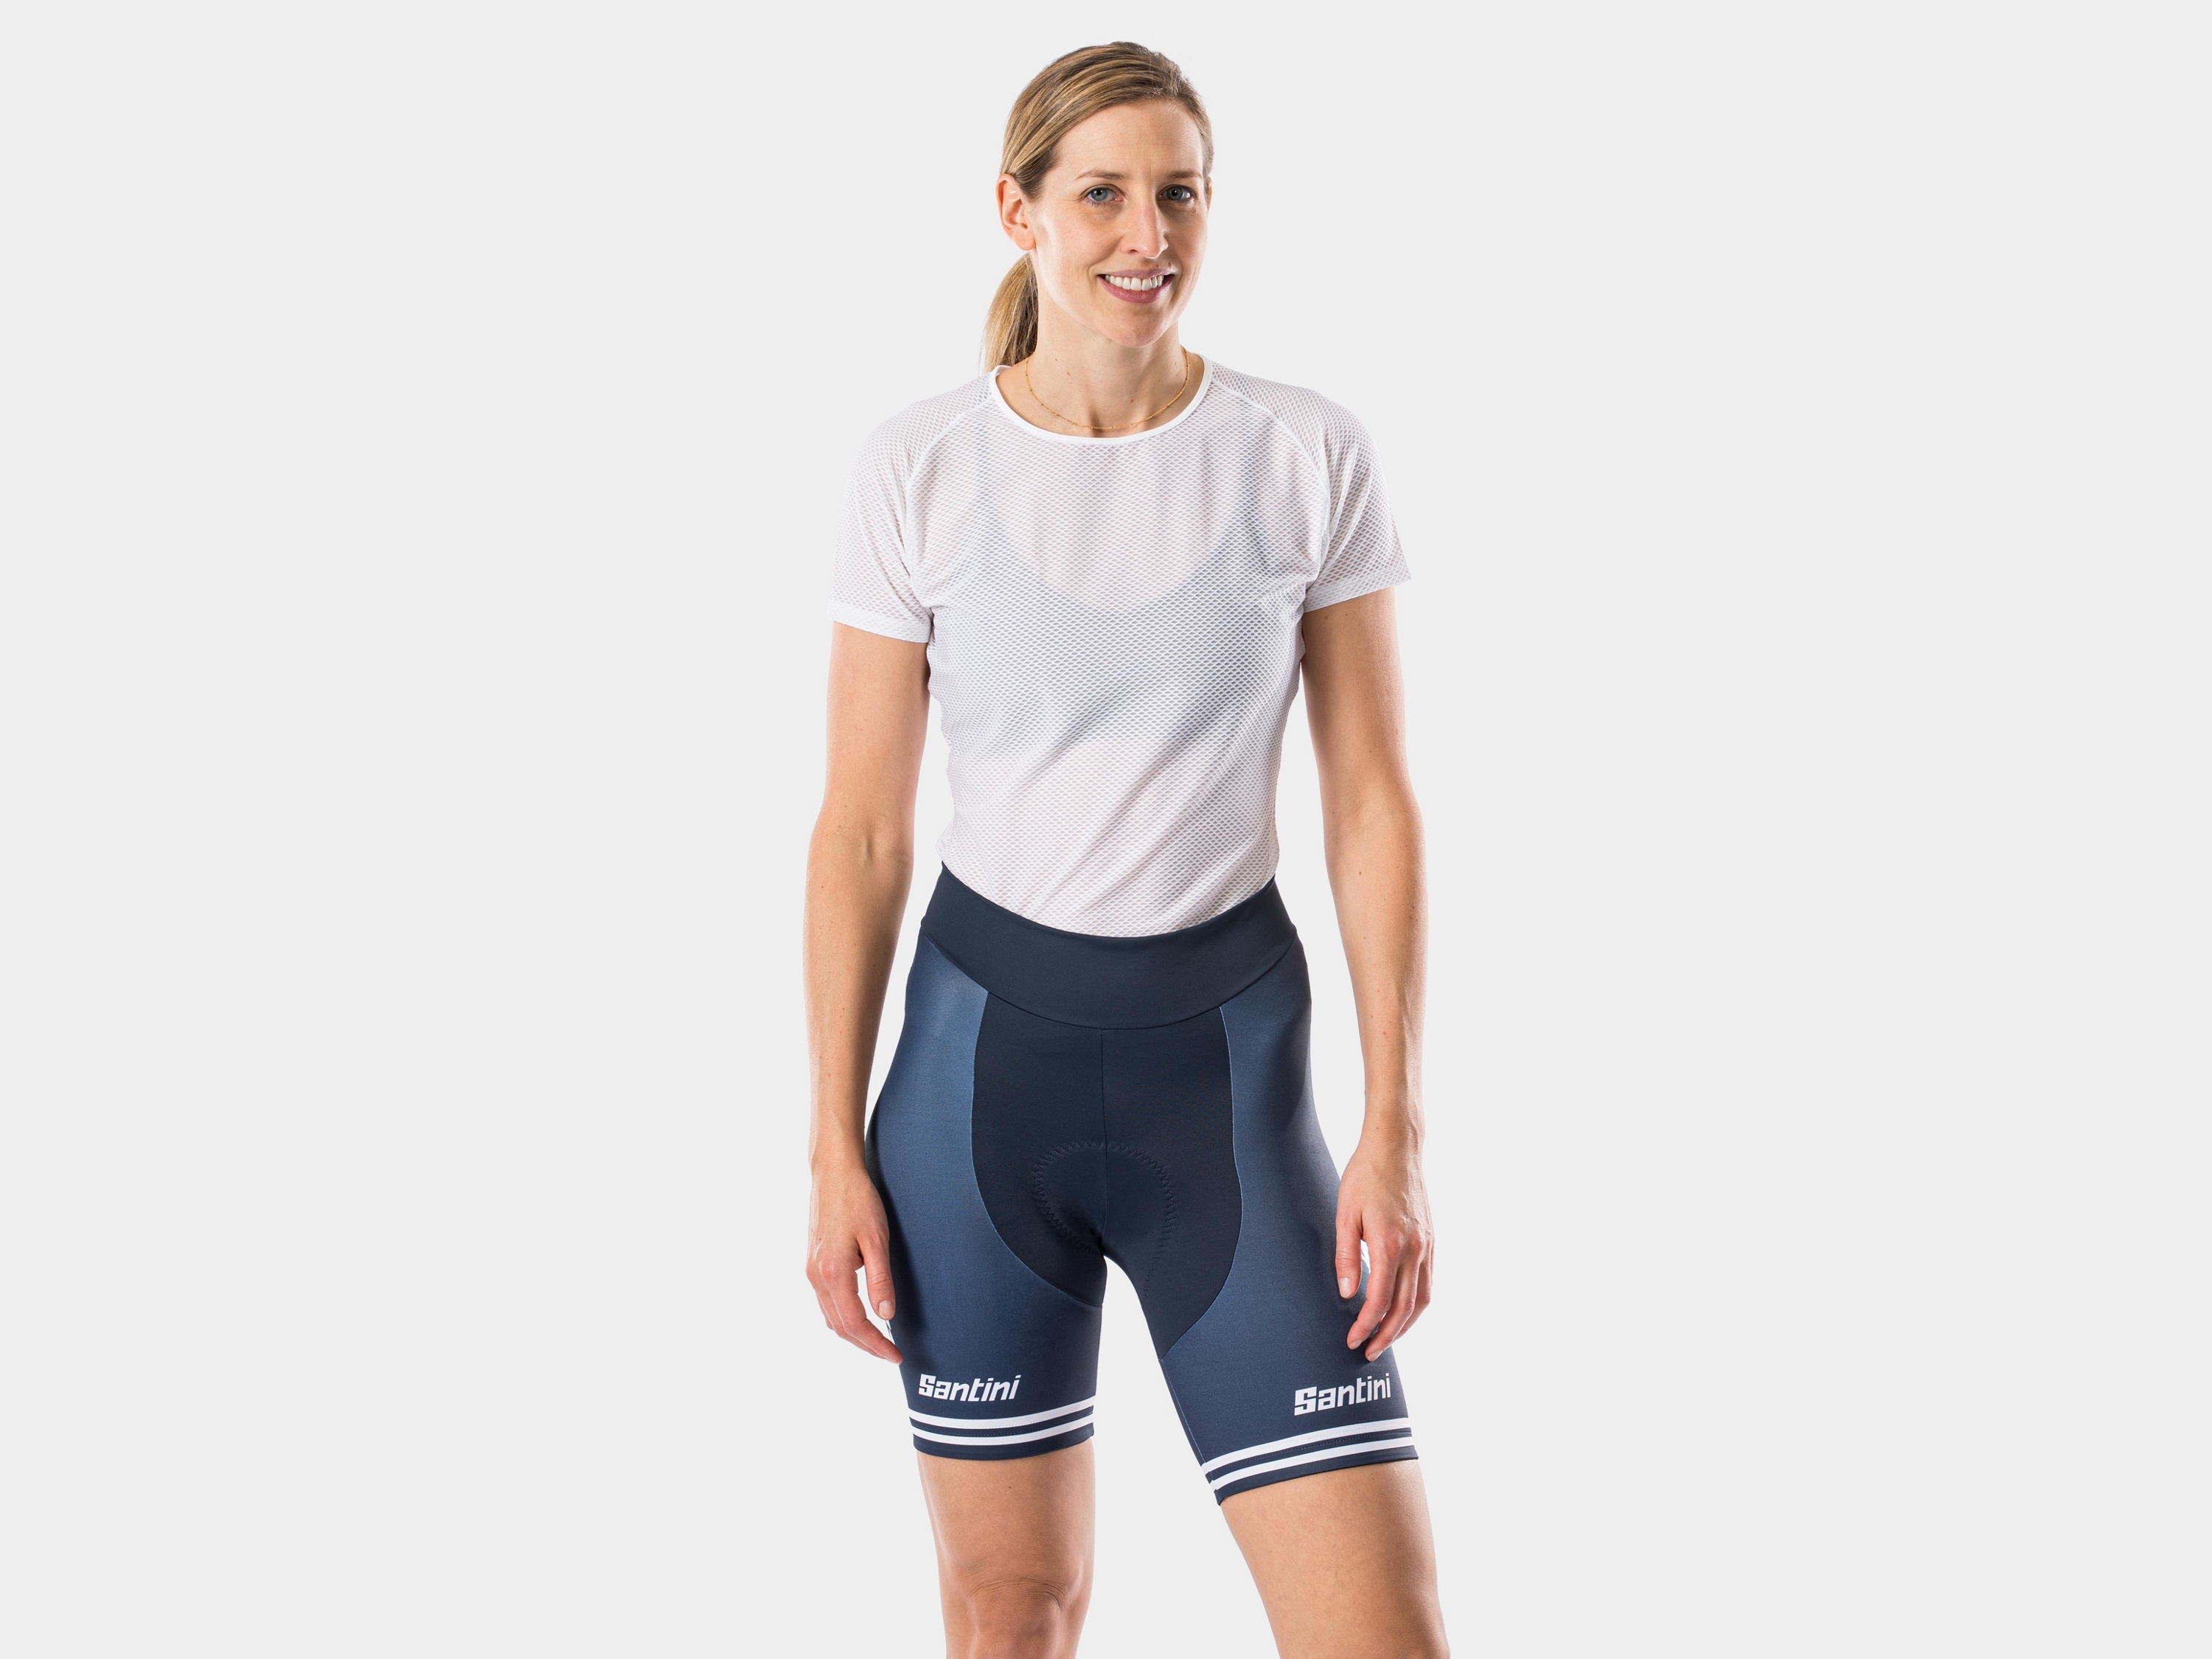 padded bike shorts australia